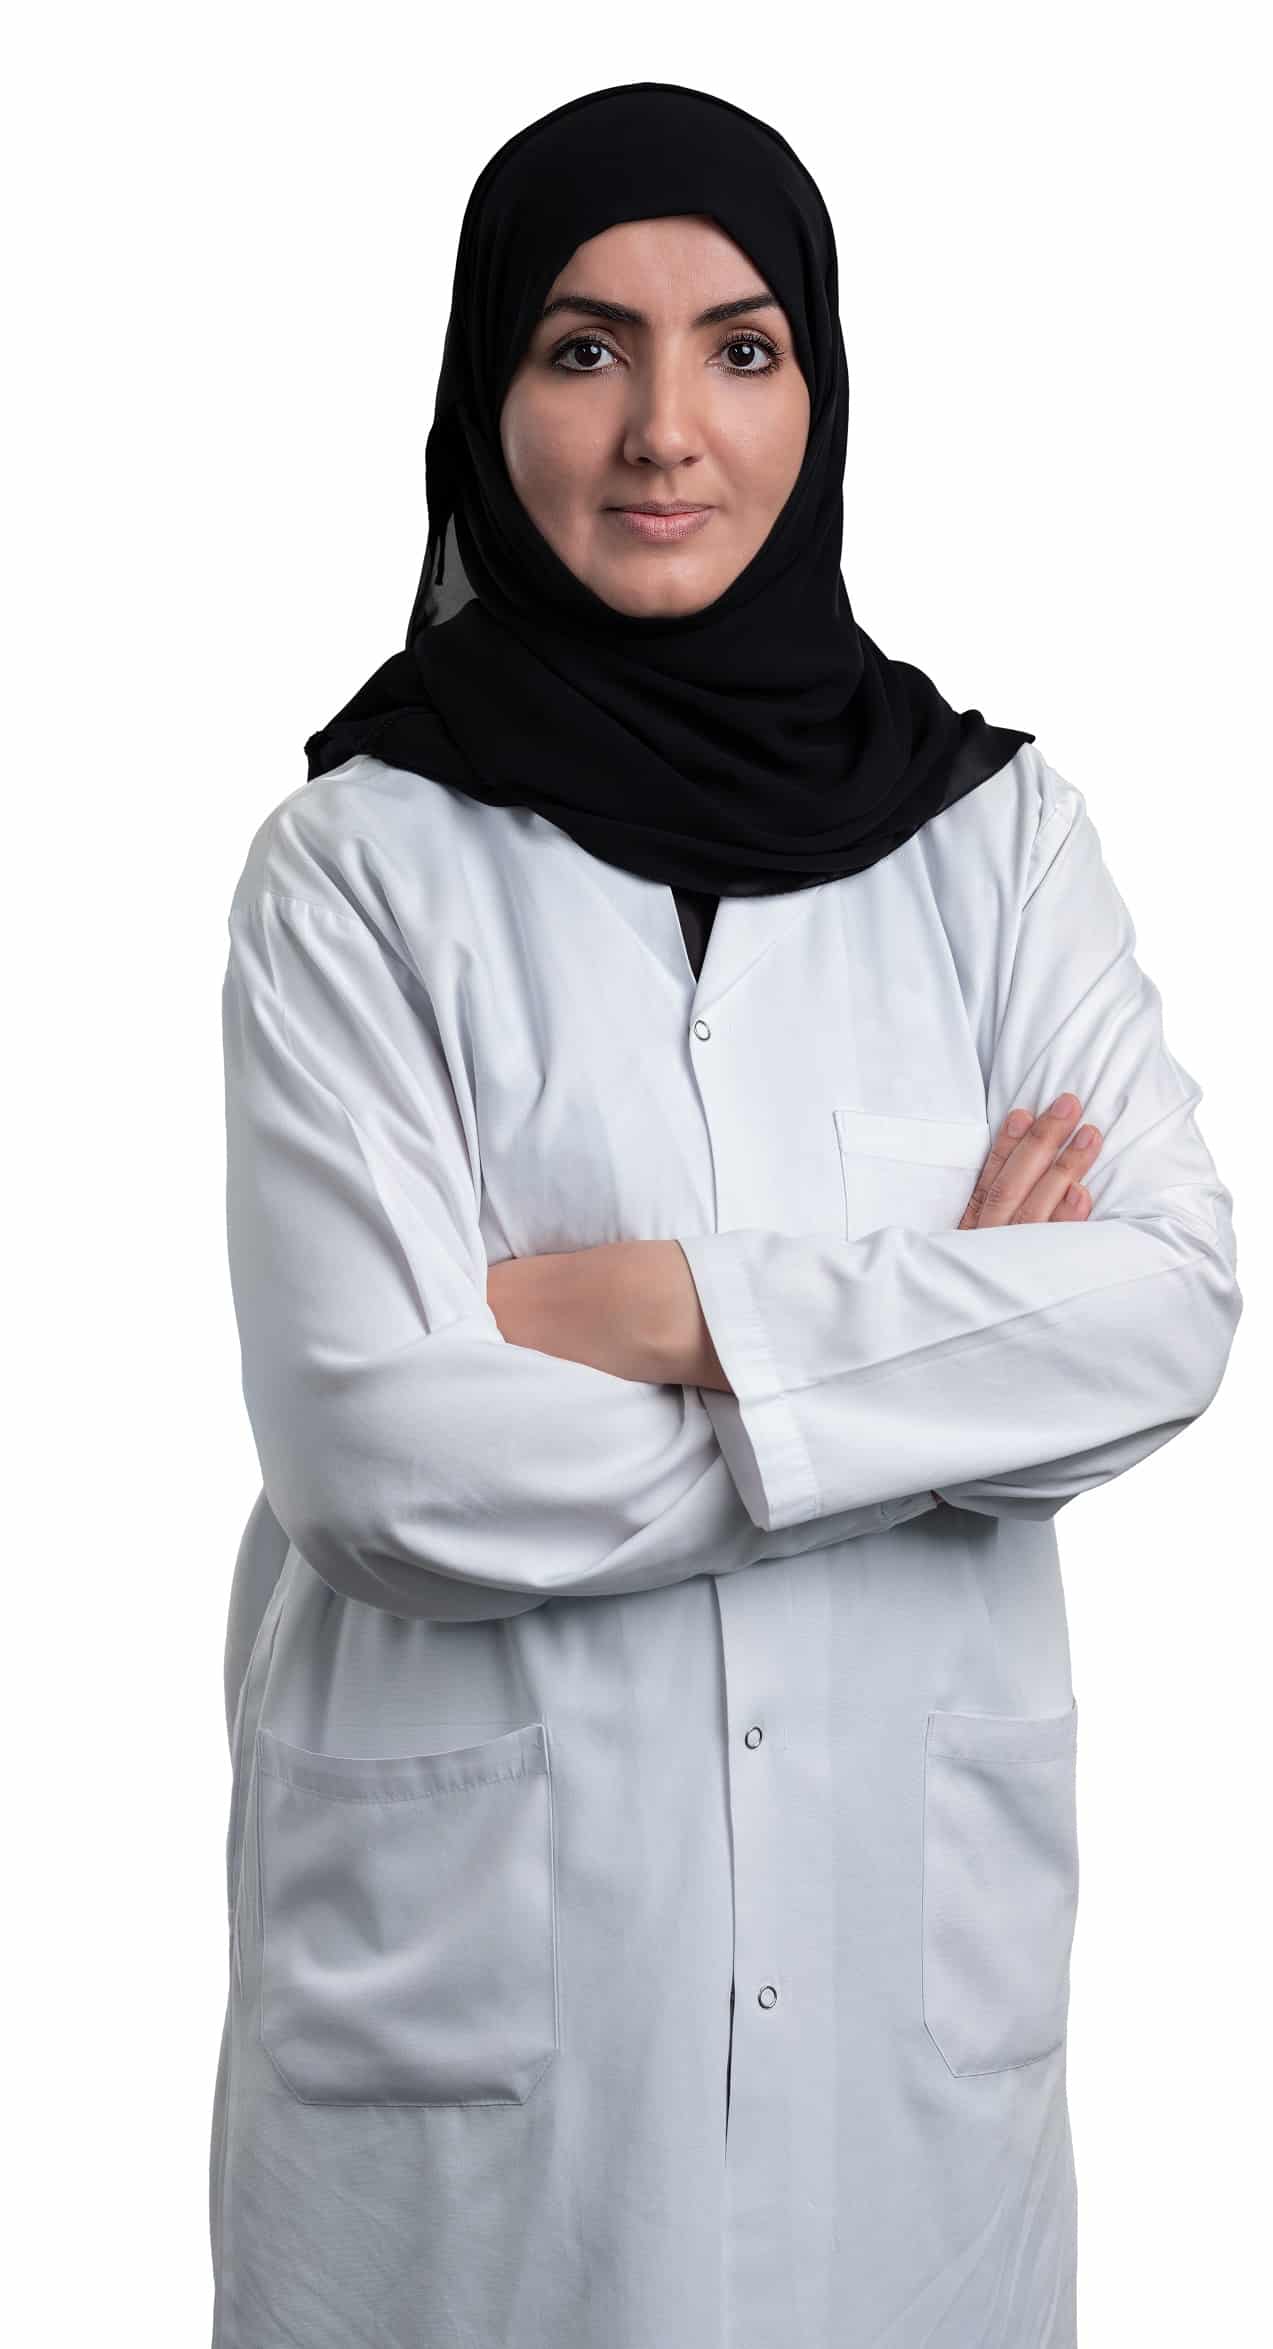 Dr. Mariam Nasir Alzaabi